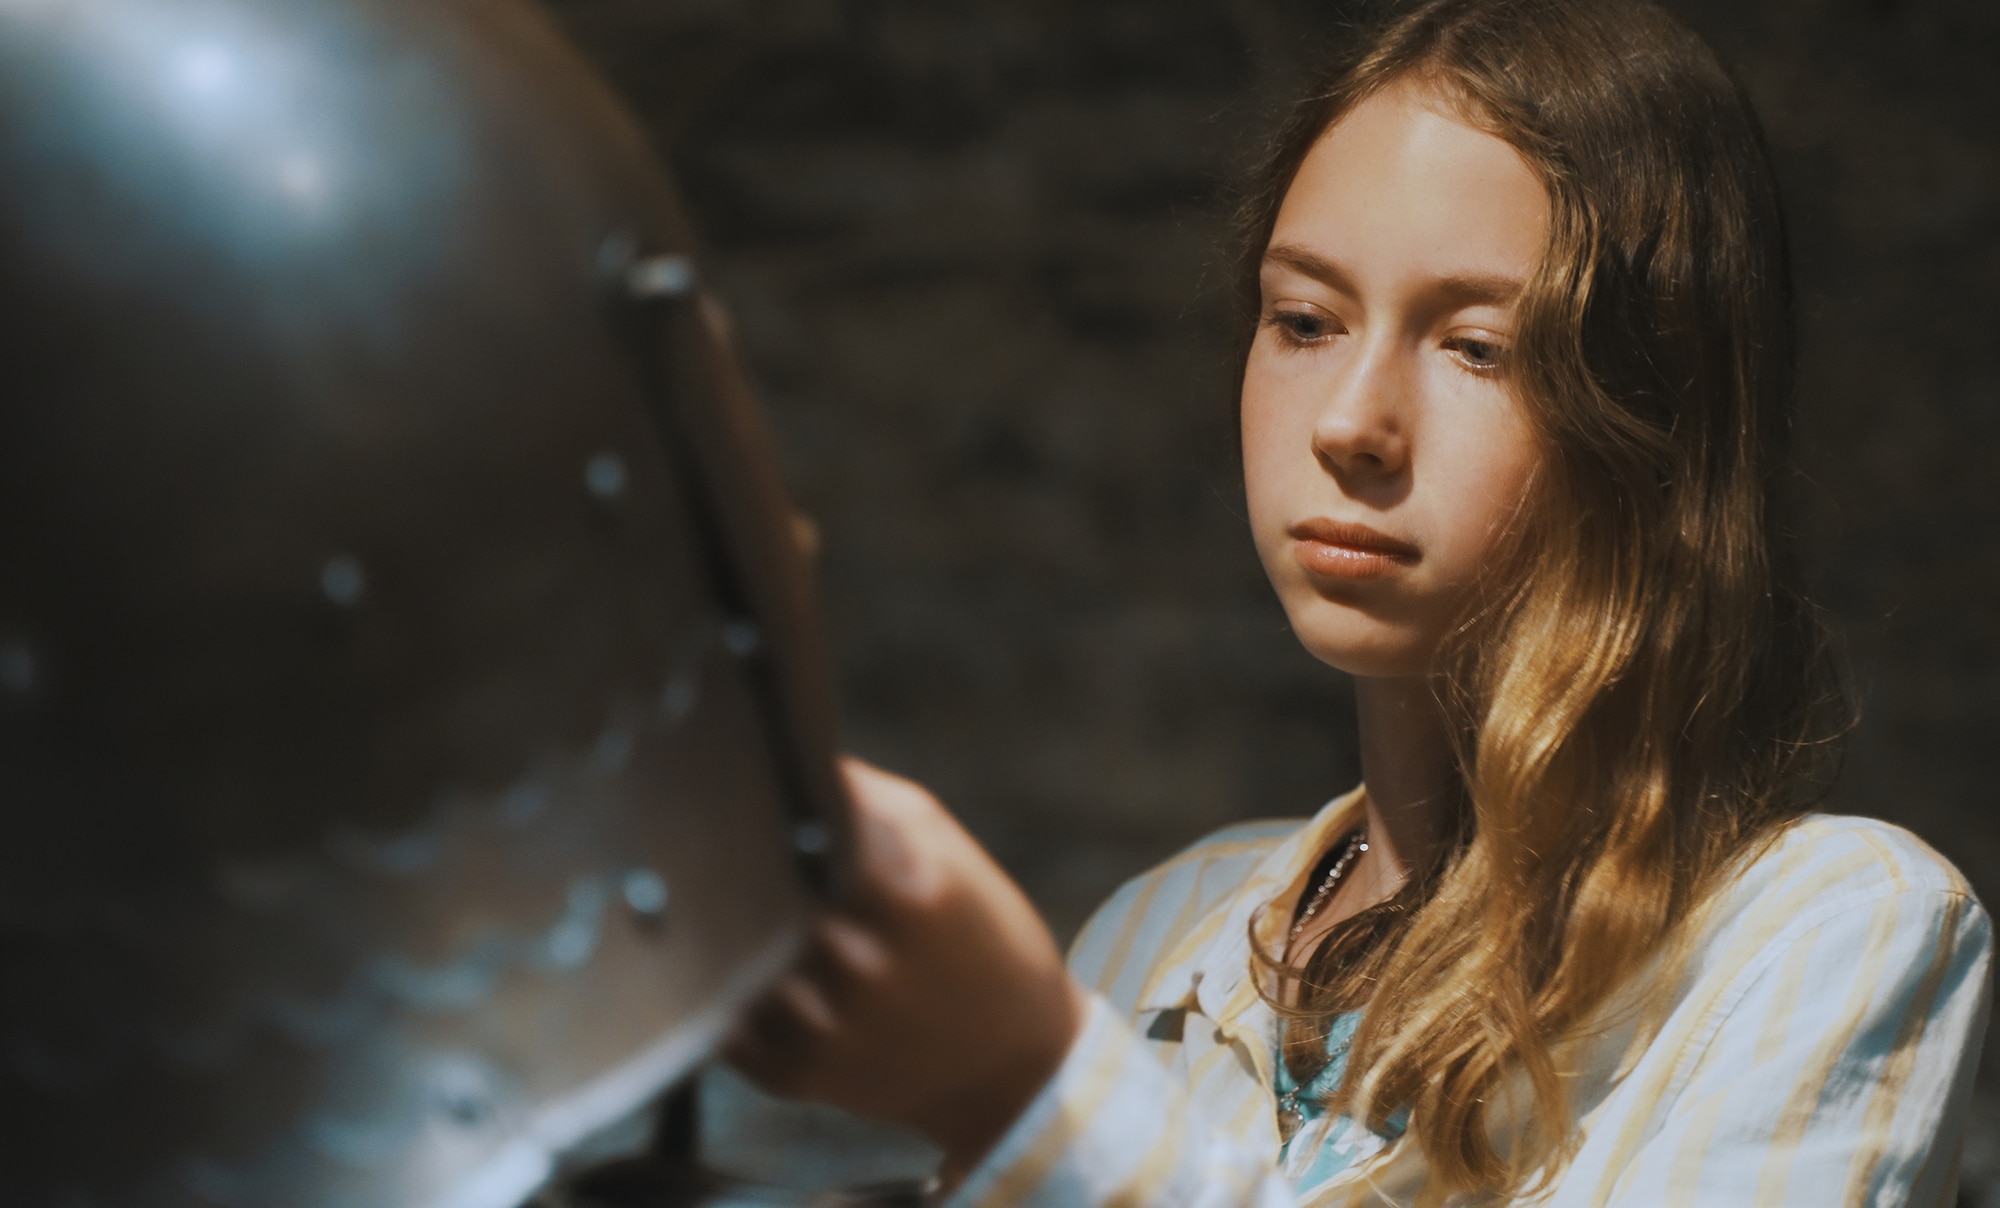 history curriculum - teen girl looking at armor